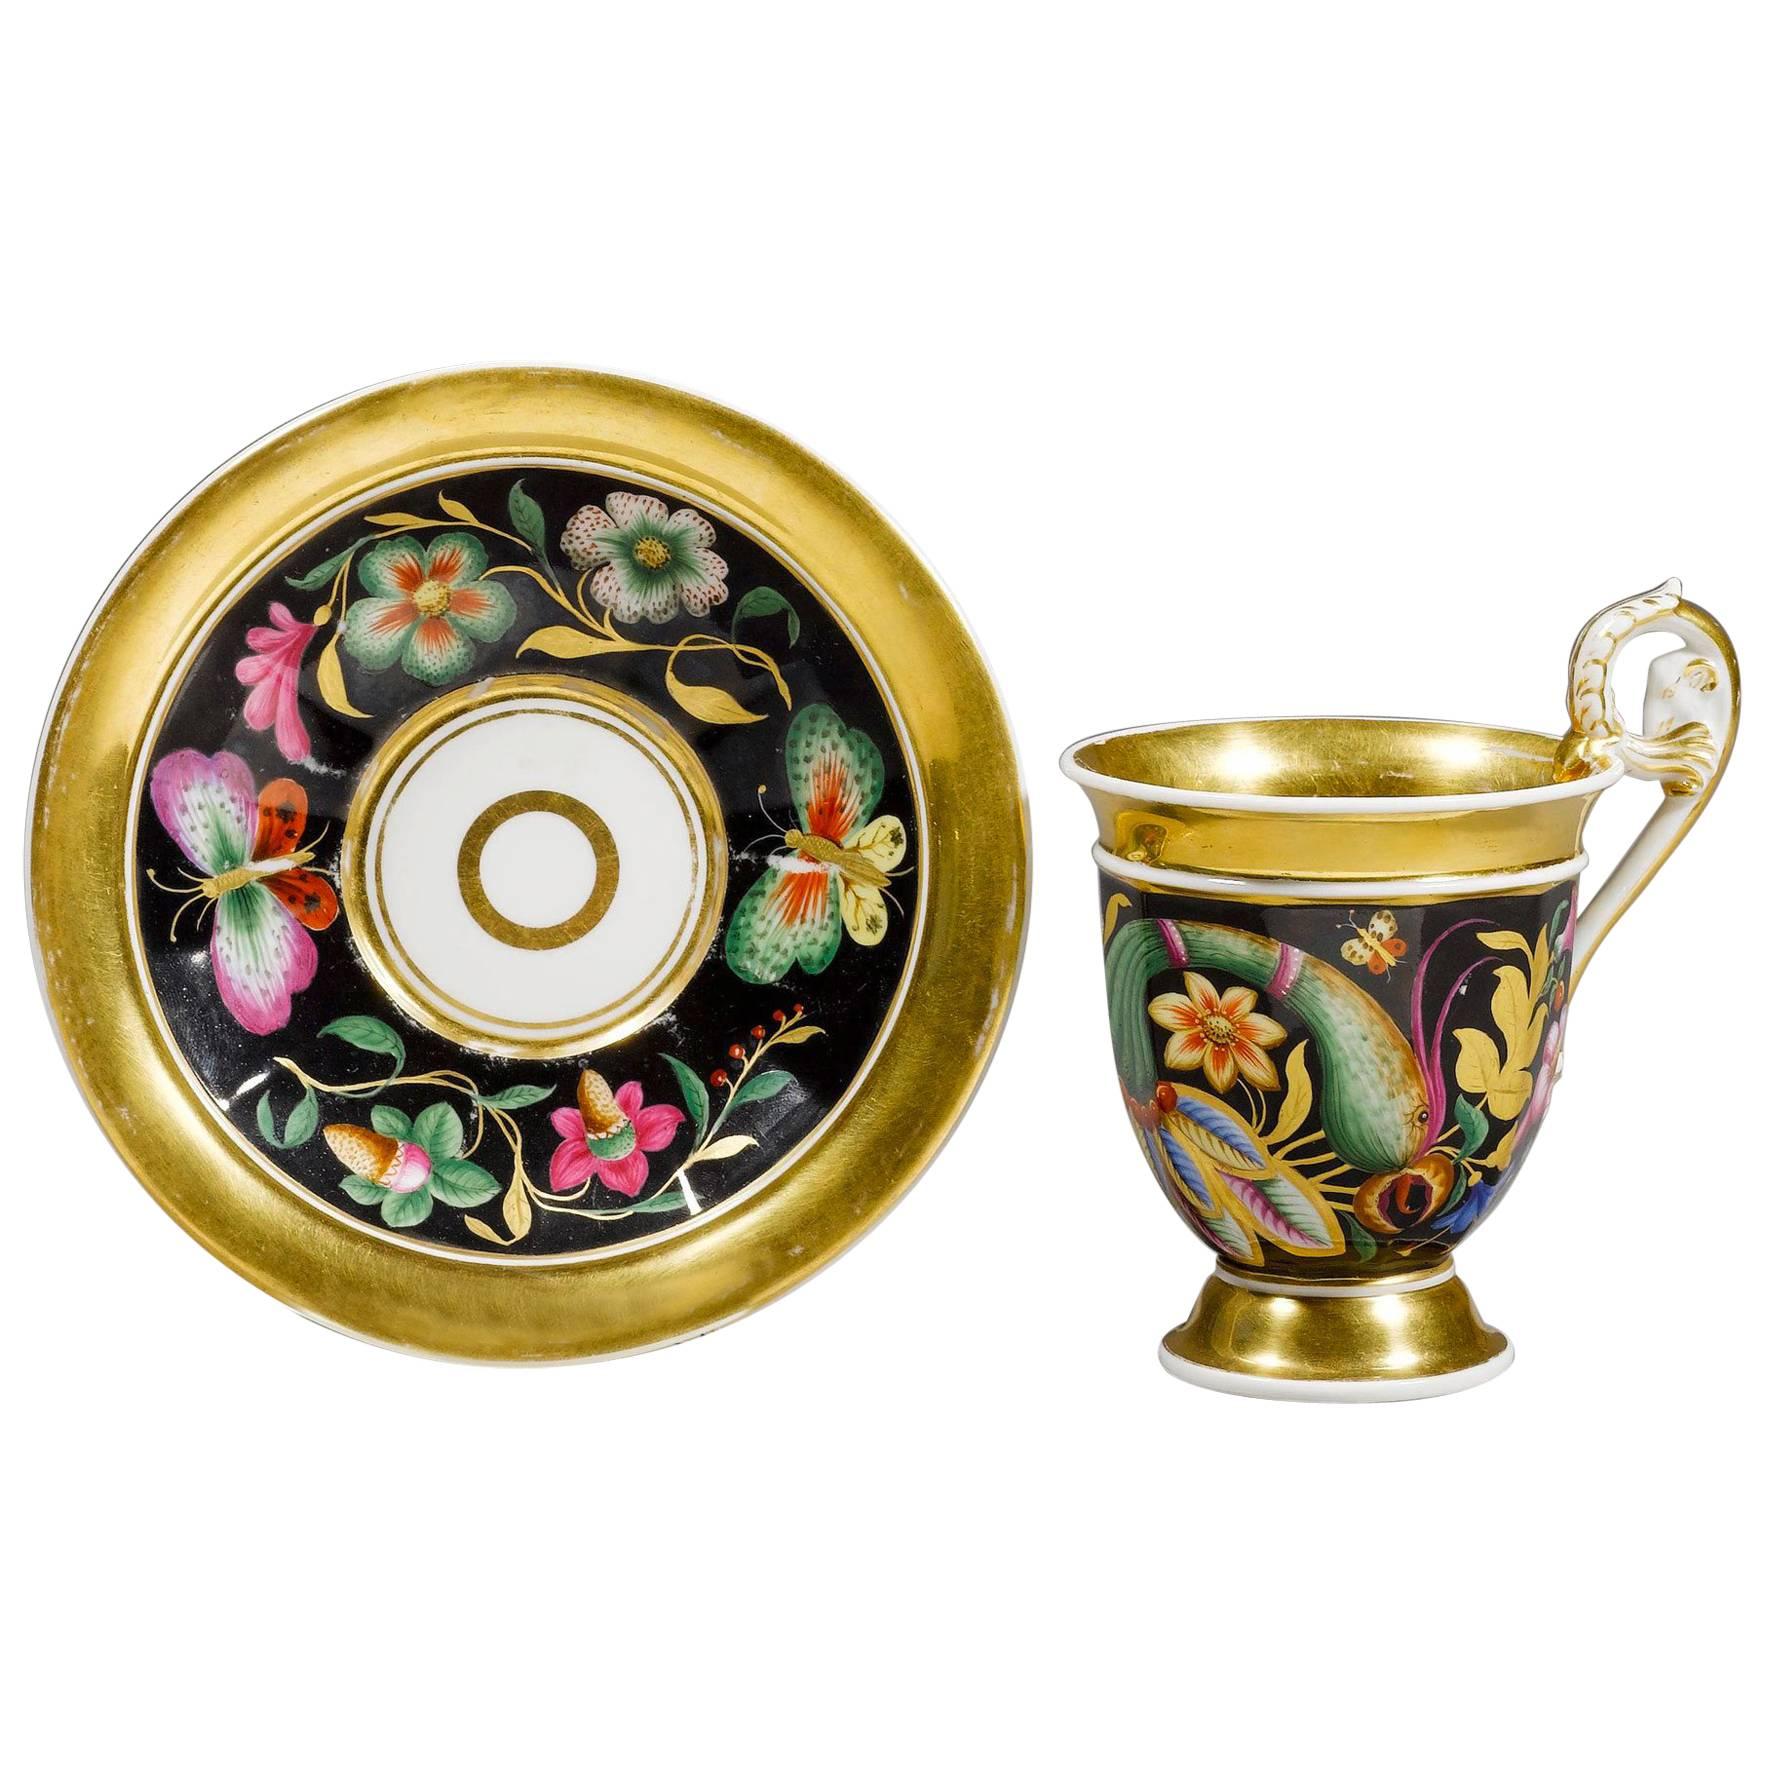 19th Century German Parcel-Gilt KPM Porcelain Teacup and Saucer